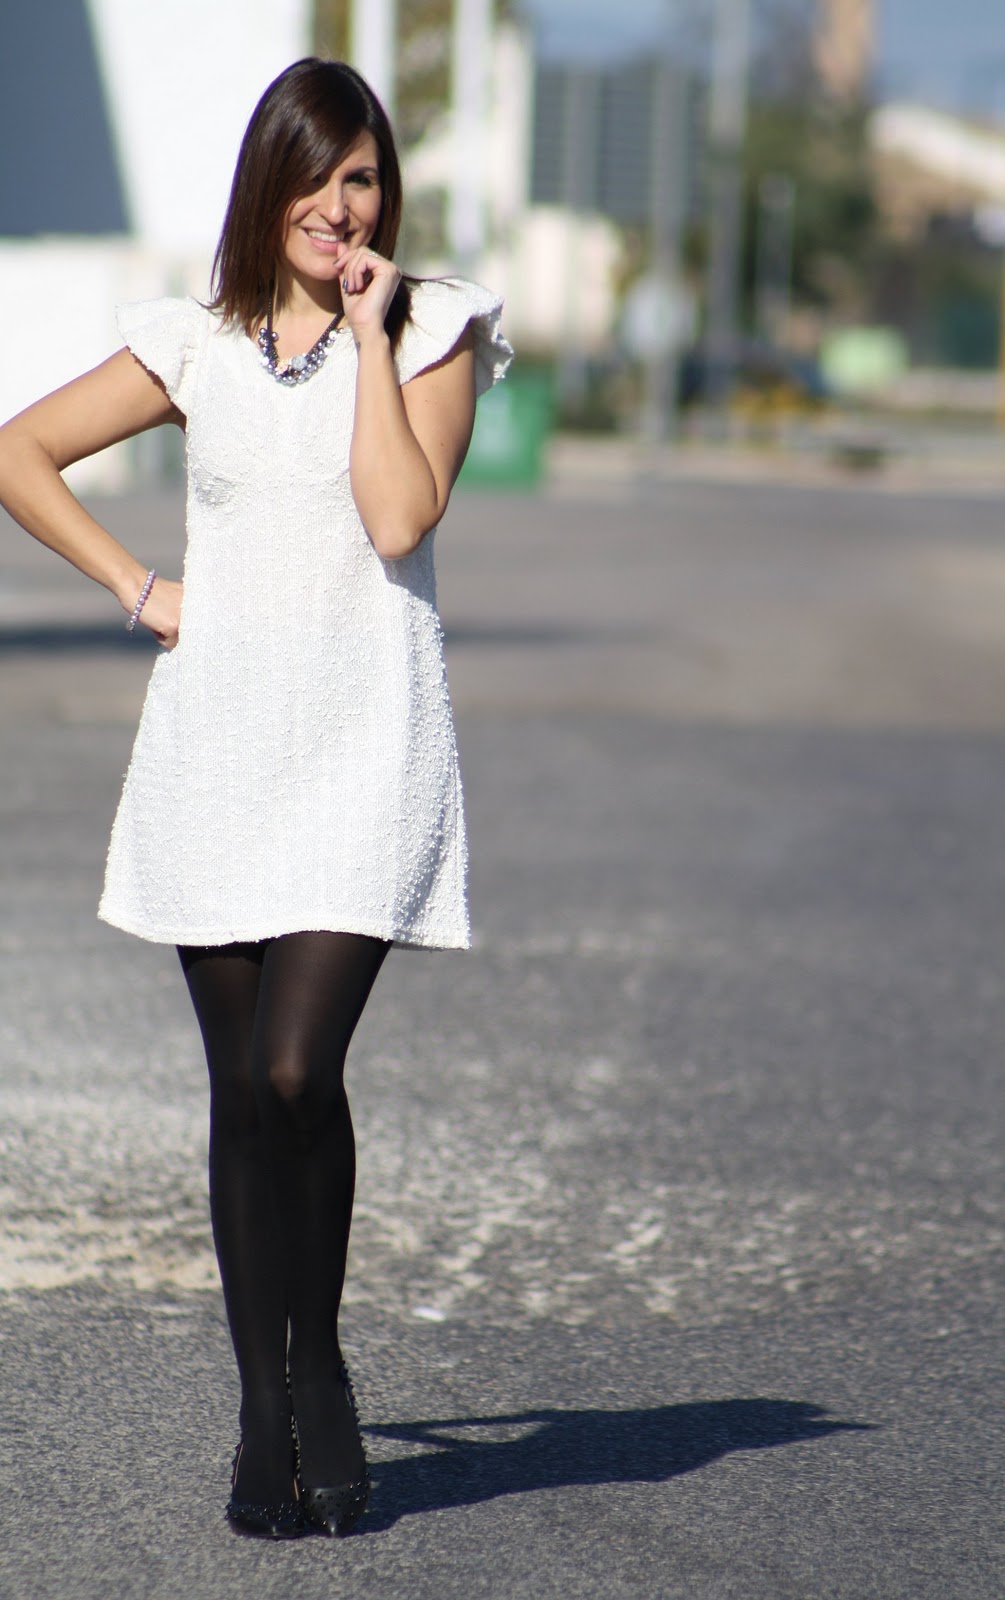 fabulous dressed blogger woman: Spain girl